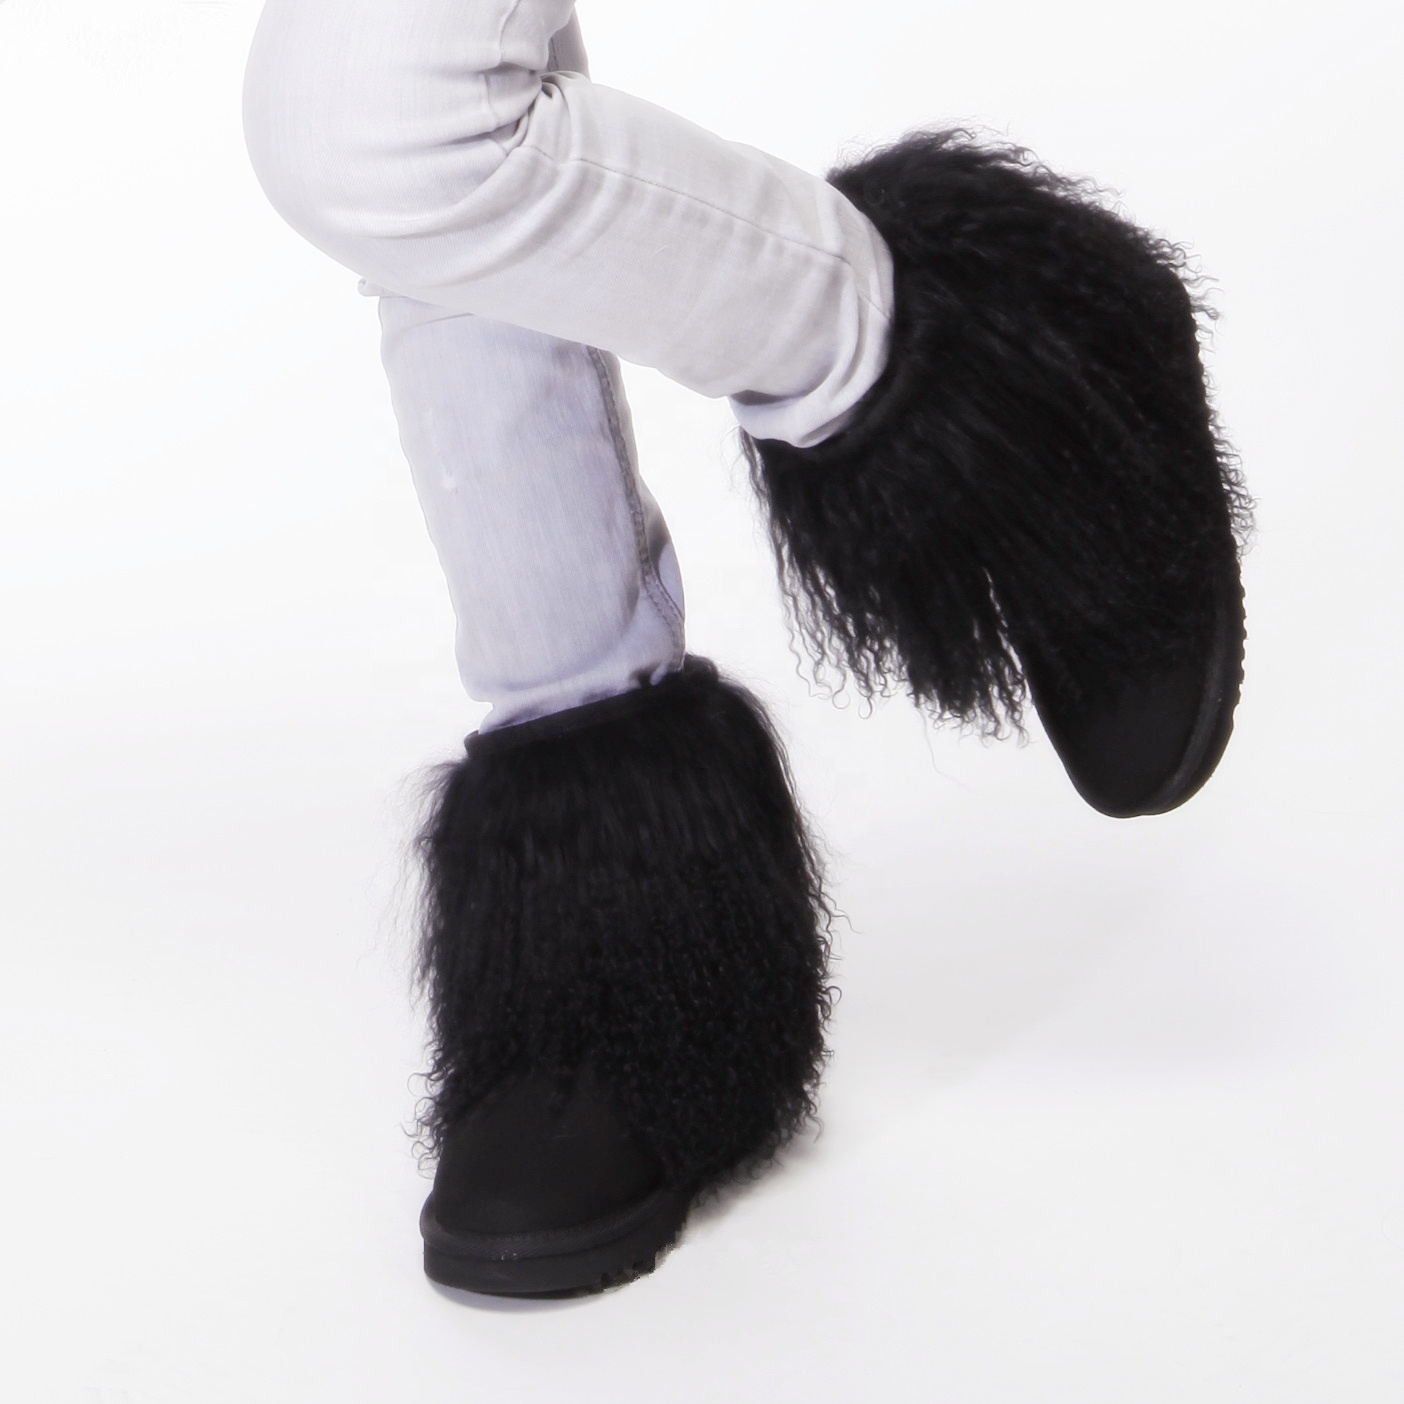 HQB-WS066 OEM customized premium quality winter thermal fashion style genuine sheepskin snow boots for women